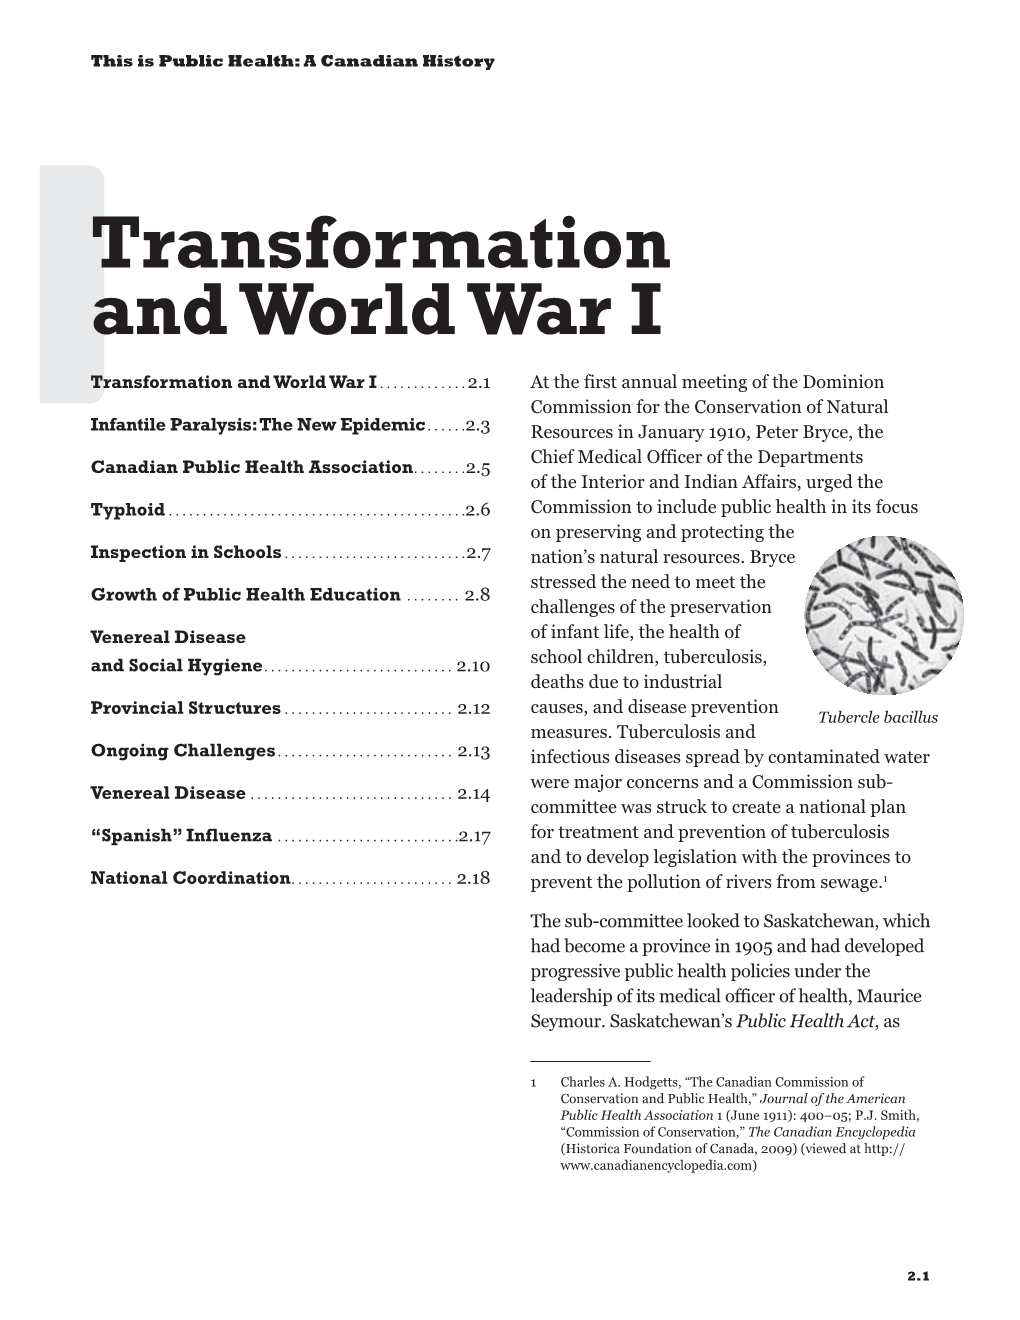 Transformation and World War I